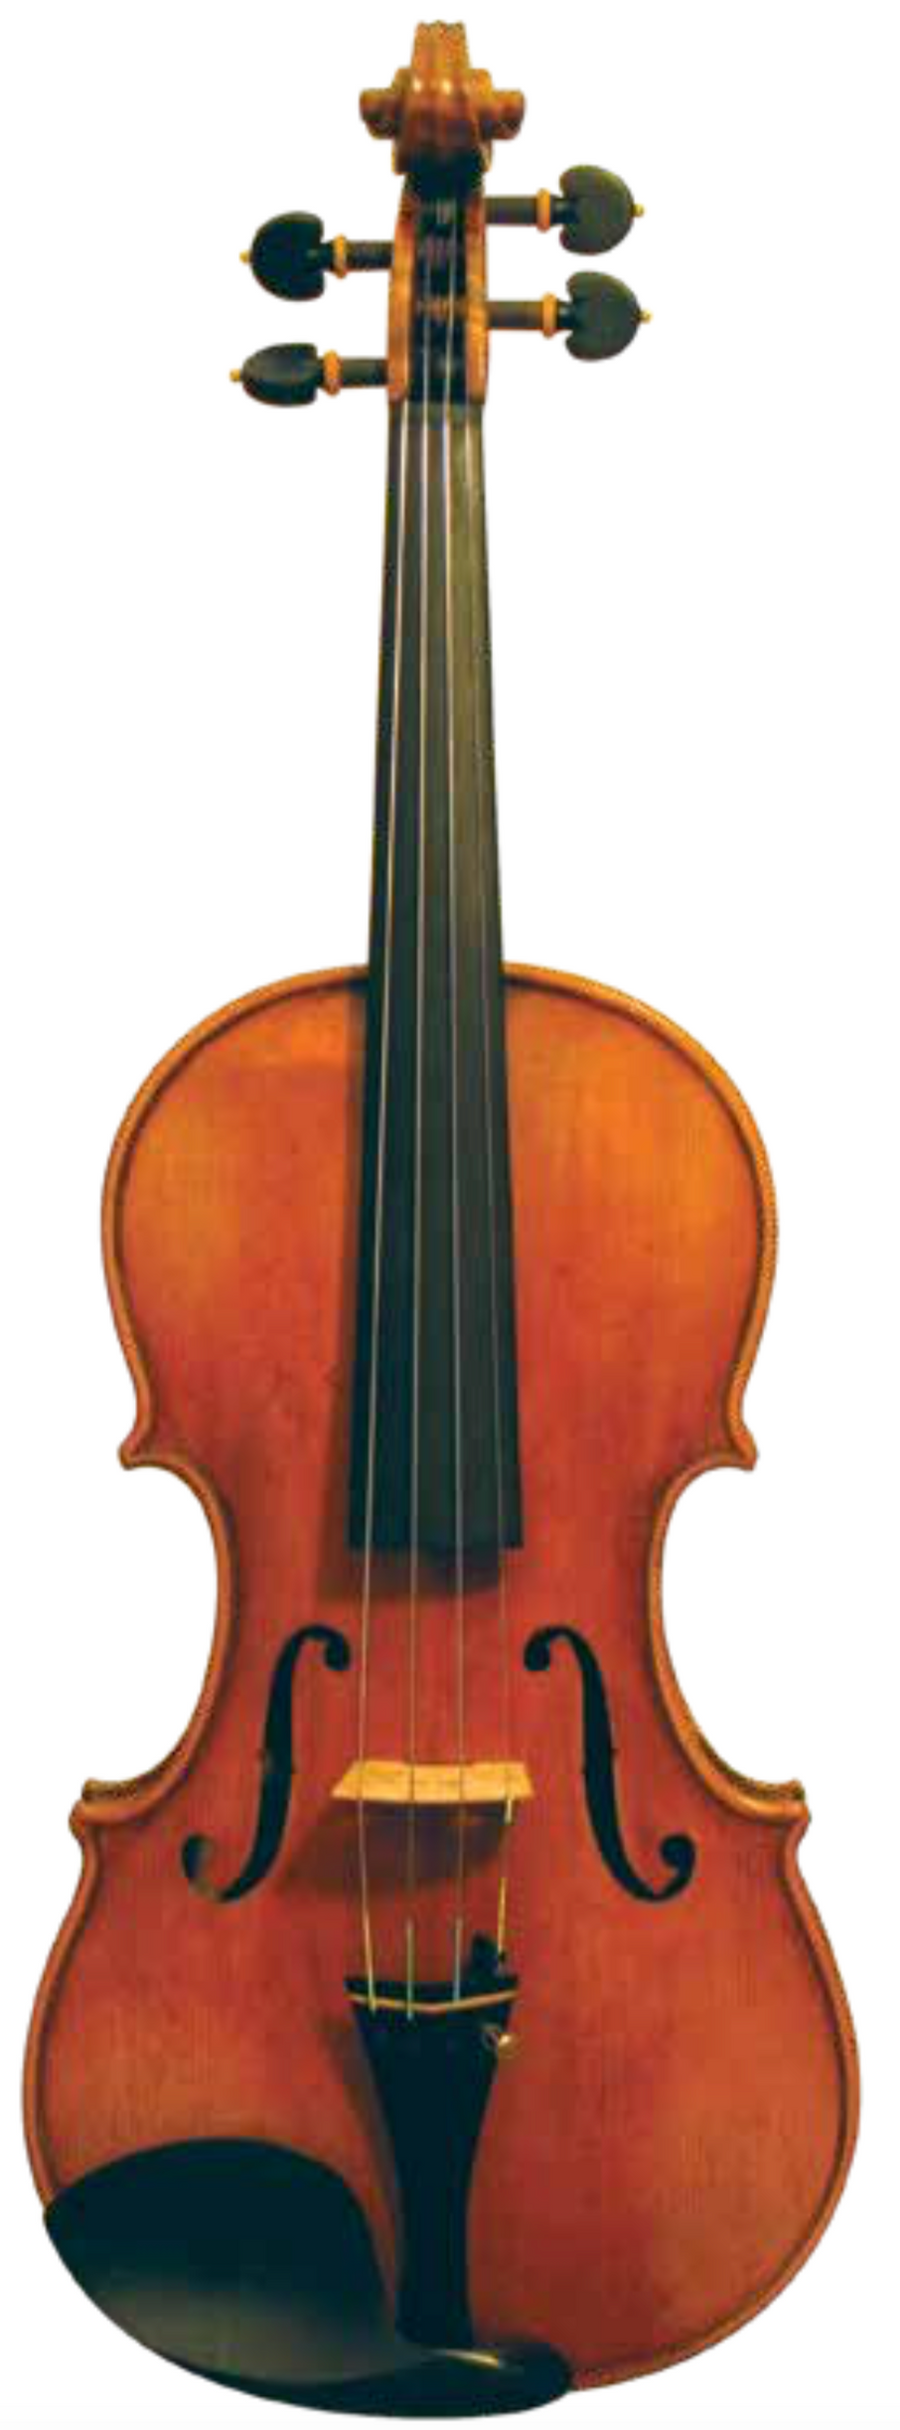 Maple Leaf Strings Burled Maple Violin front